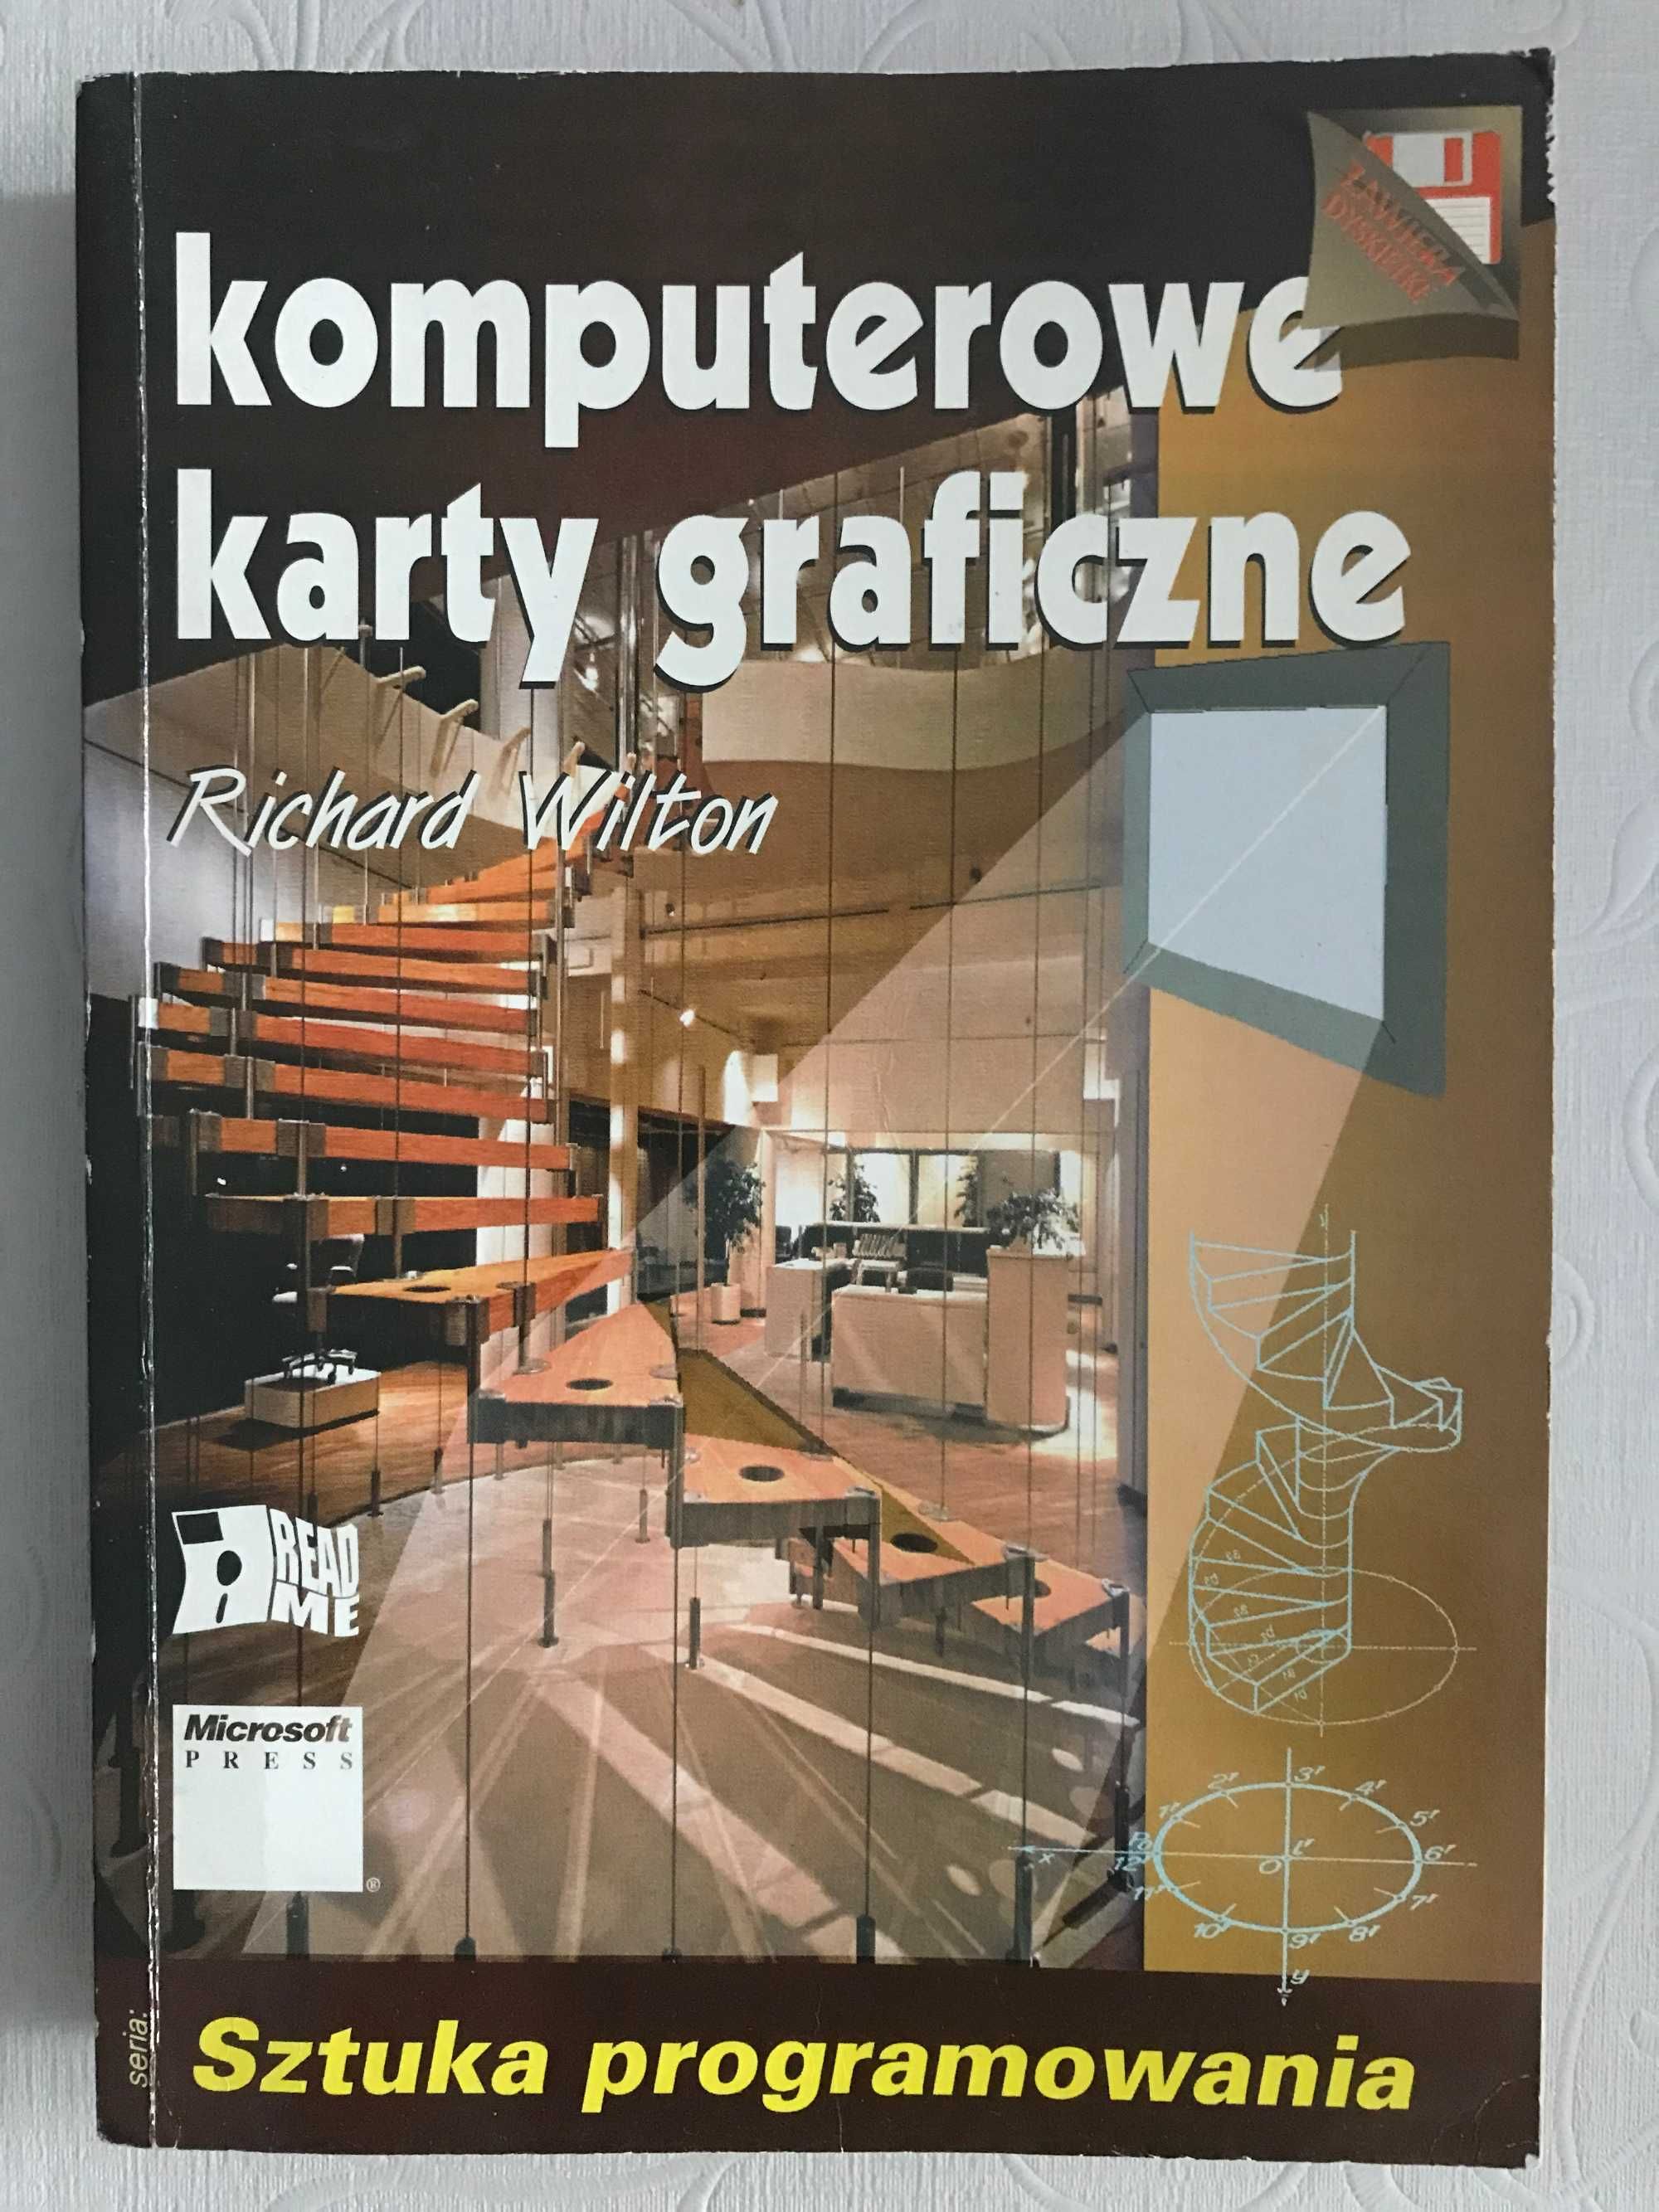 Richard Wilton "Komputerowe karty graficzne" KLASYKA INFORMATYKI